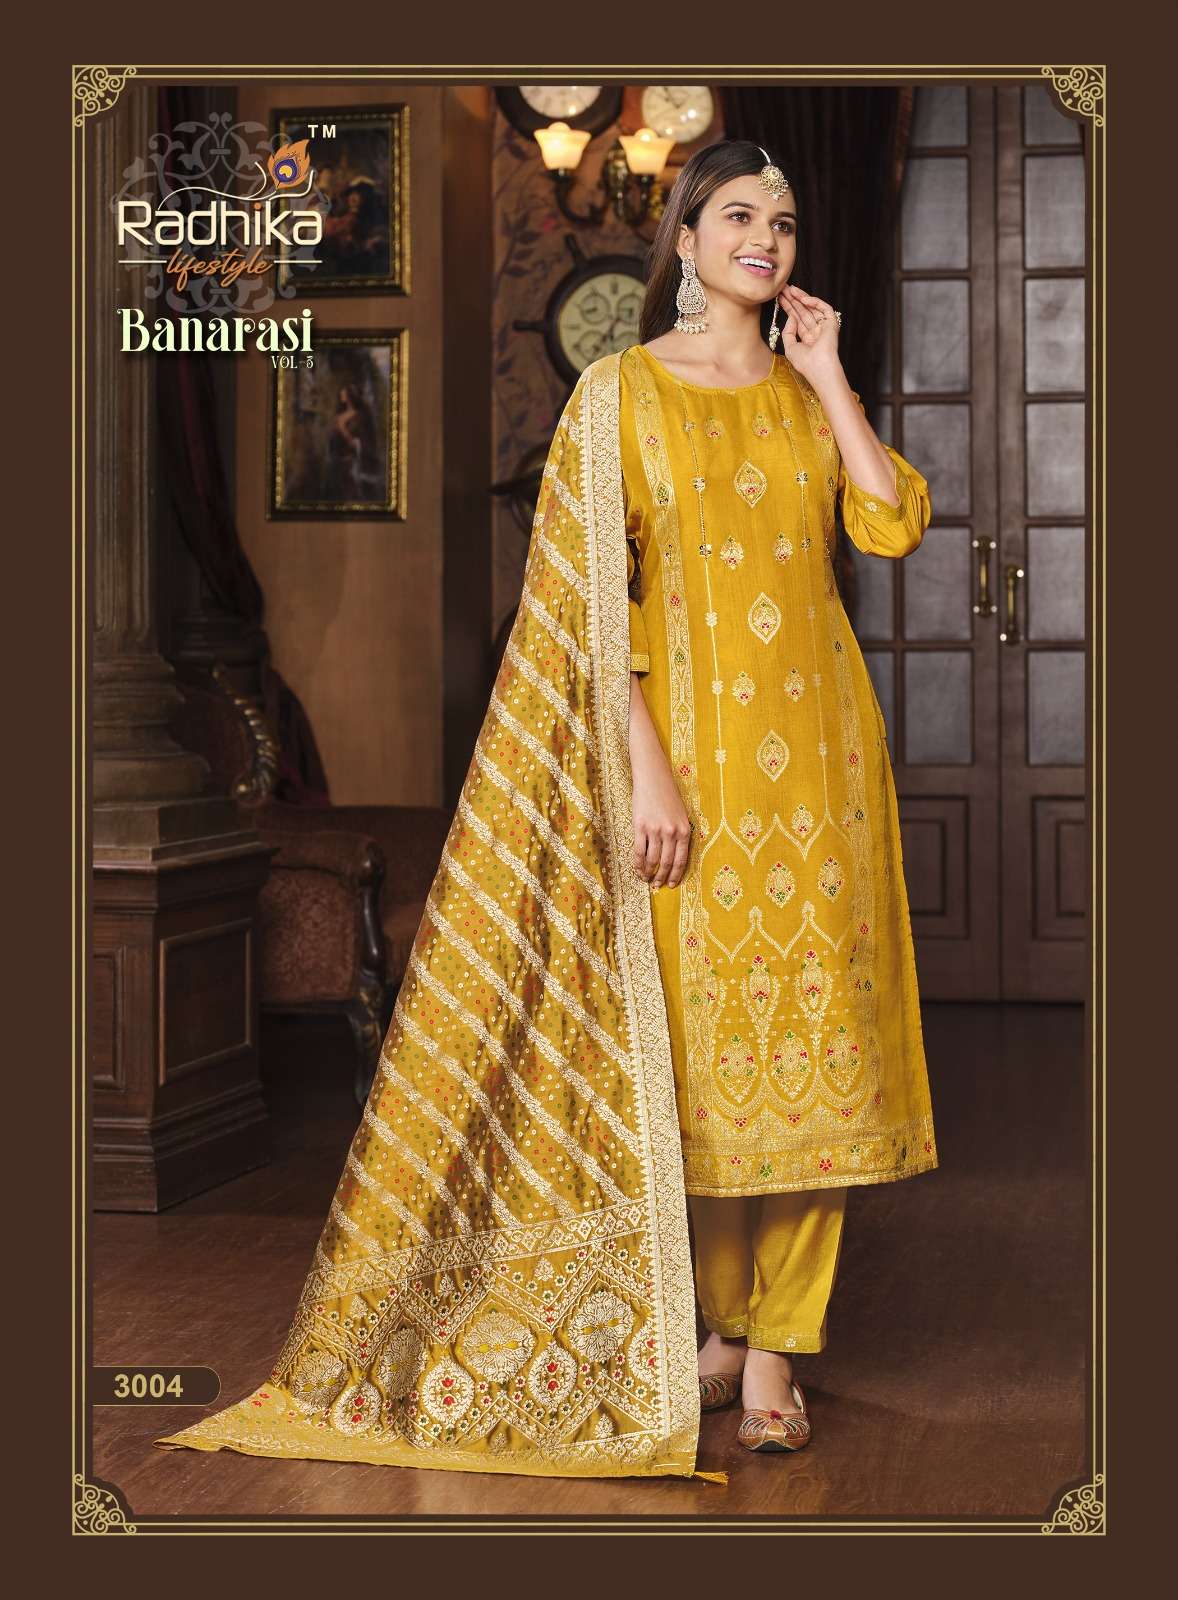 radhika lifestyle banarasi vol-3 3001-3006 series function special kurti pant with dupatta latest catalogue surat